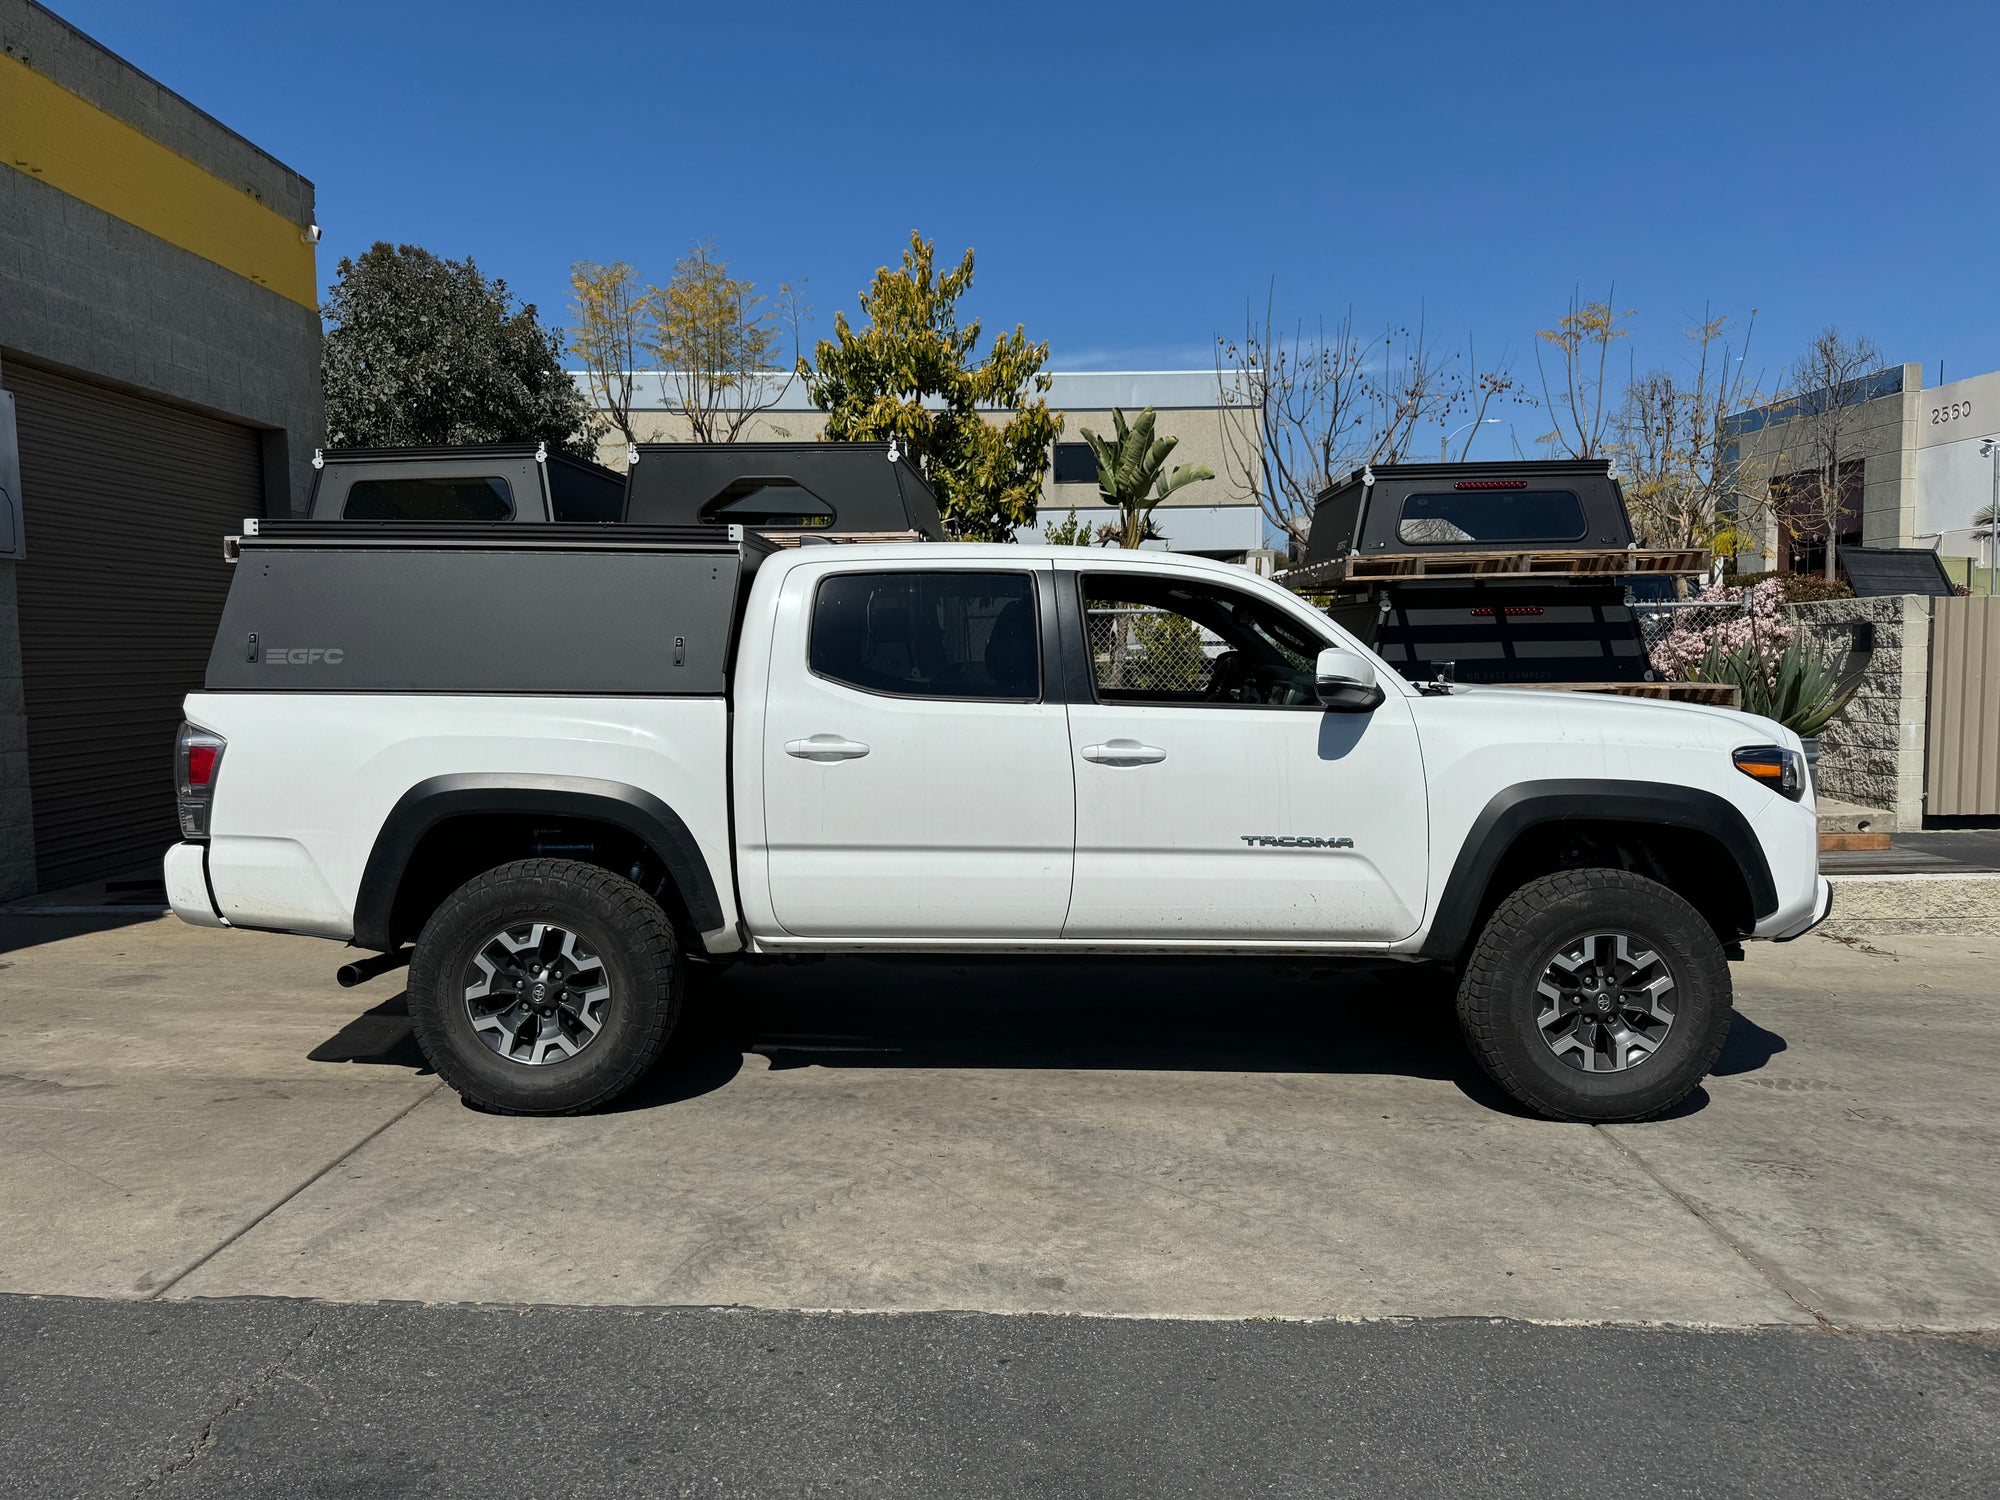 2022 Toyota Tacoma Topper - Build #491